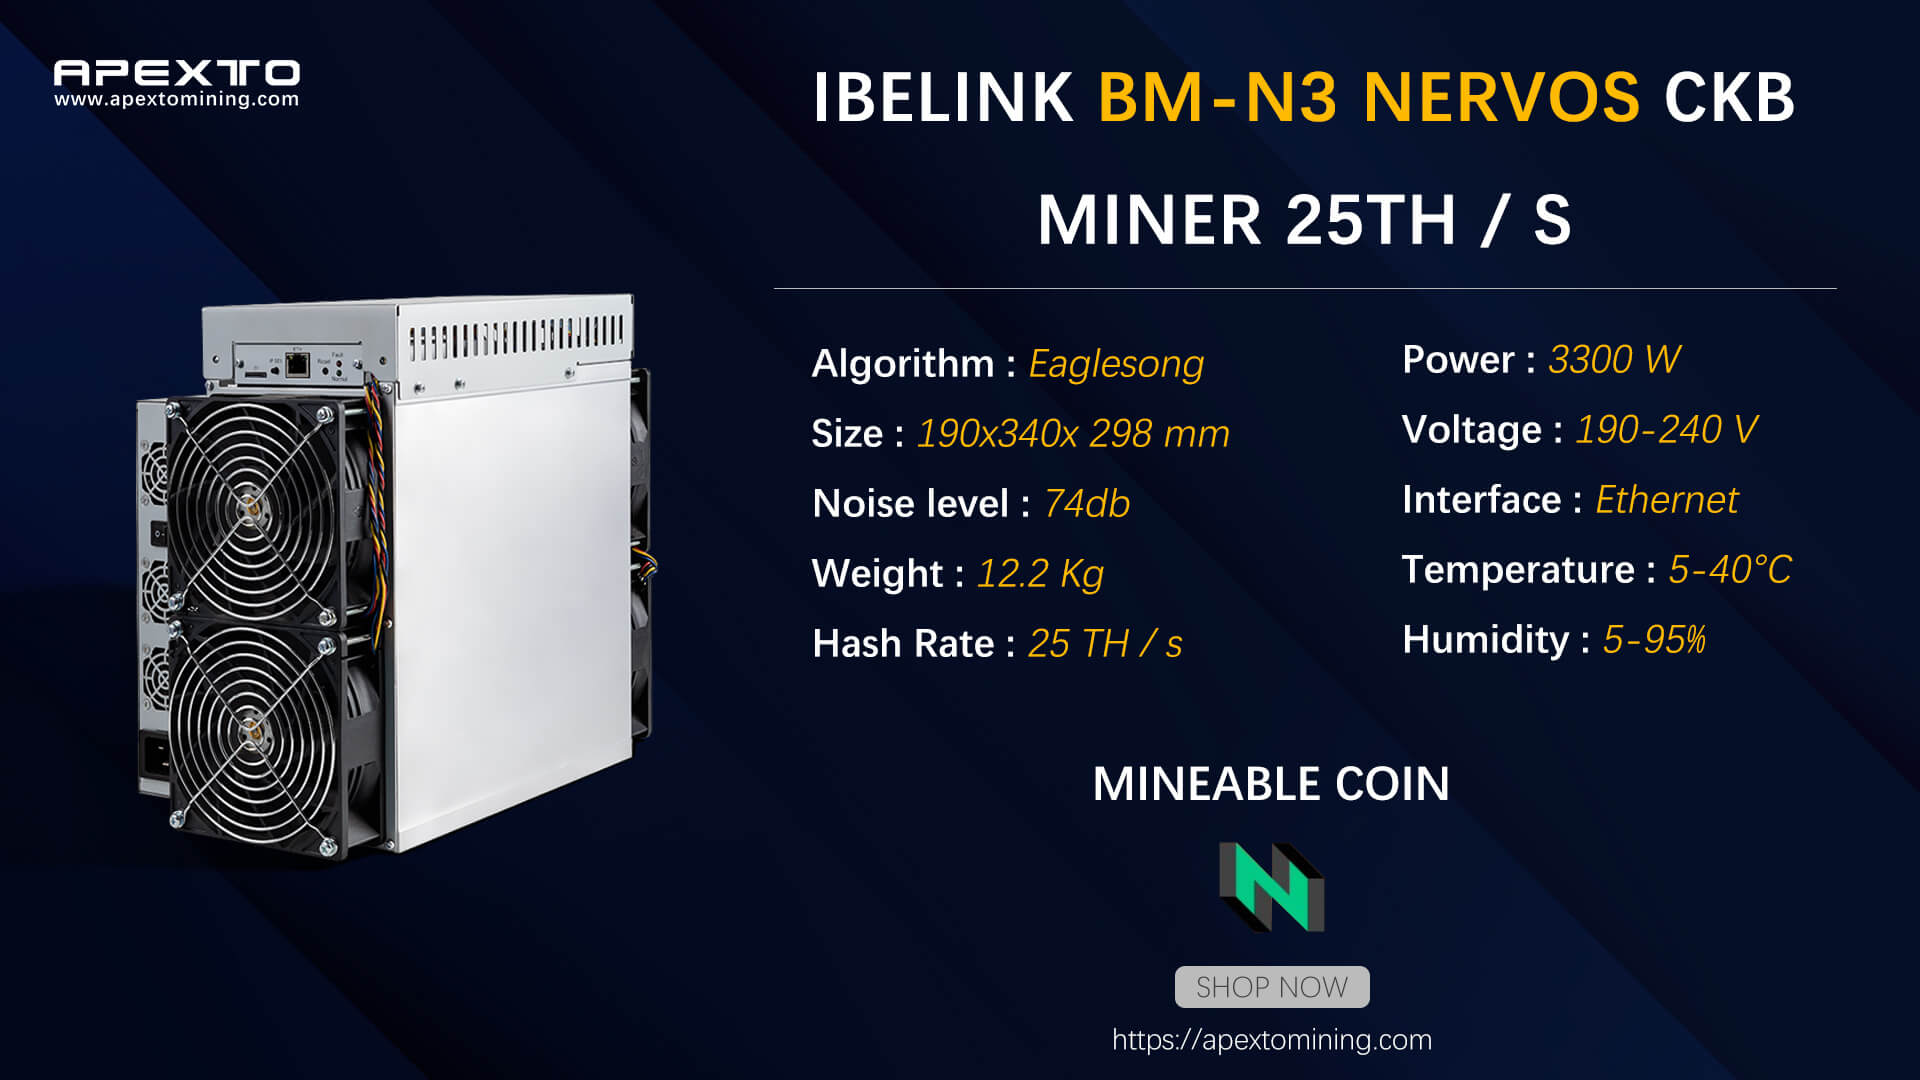 The New Arrival iBelink CKB Miner : BM -N3